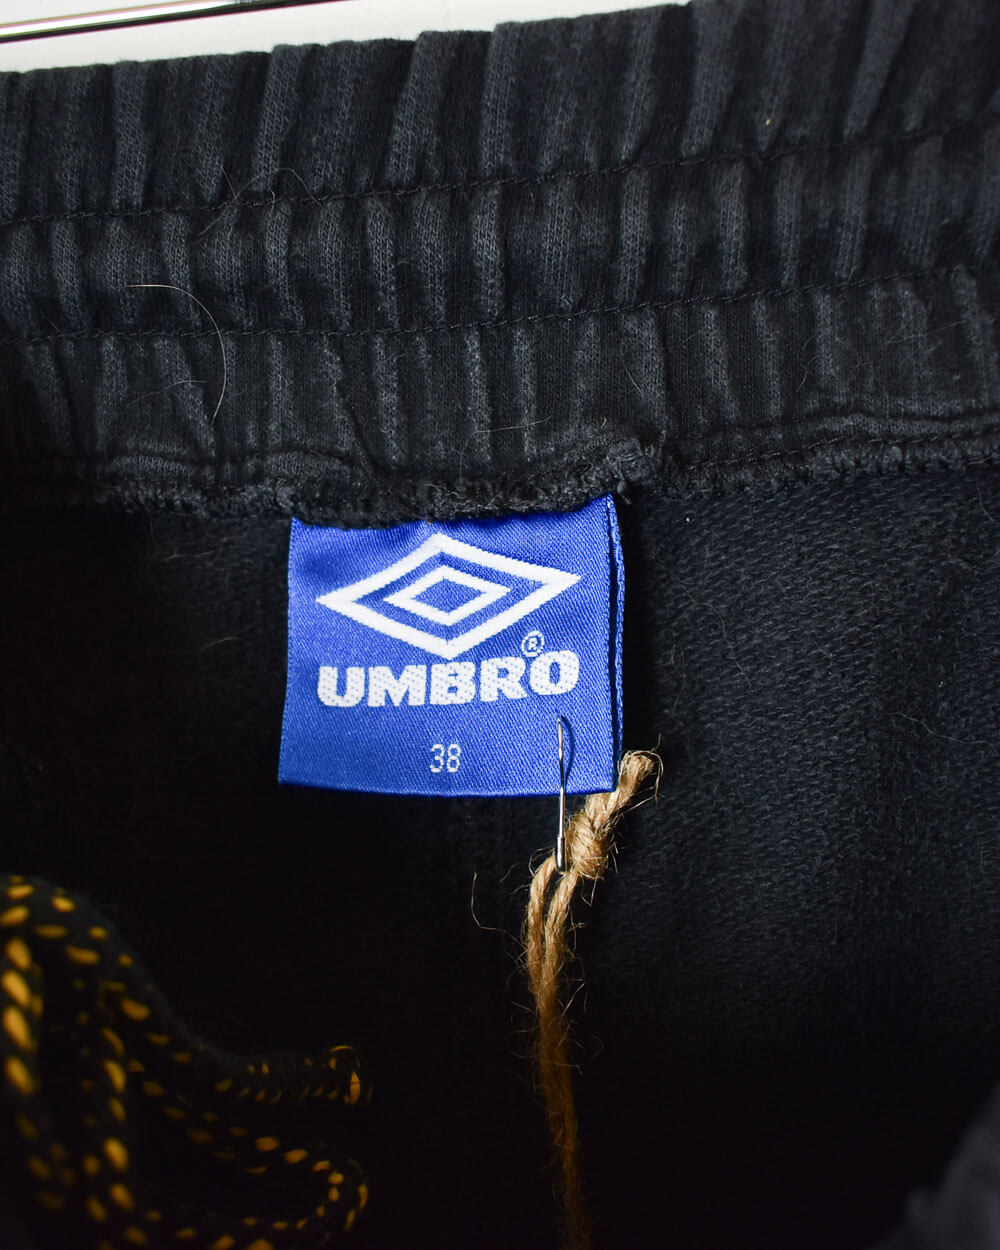 Black Umbro Original Shorts - W38